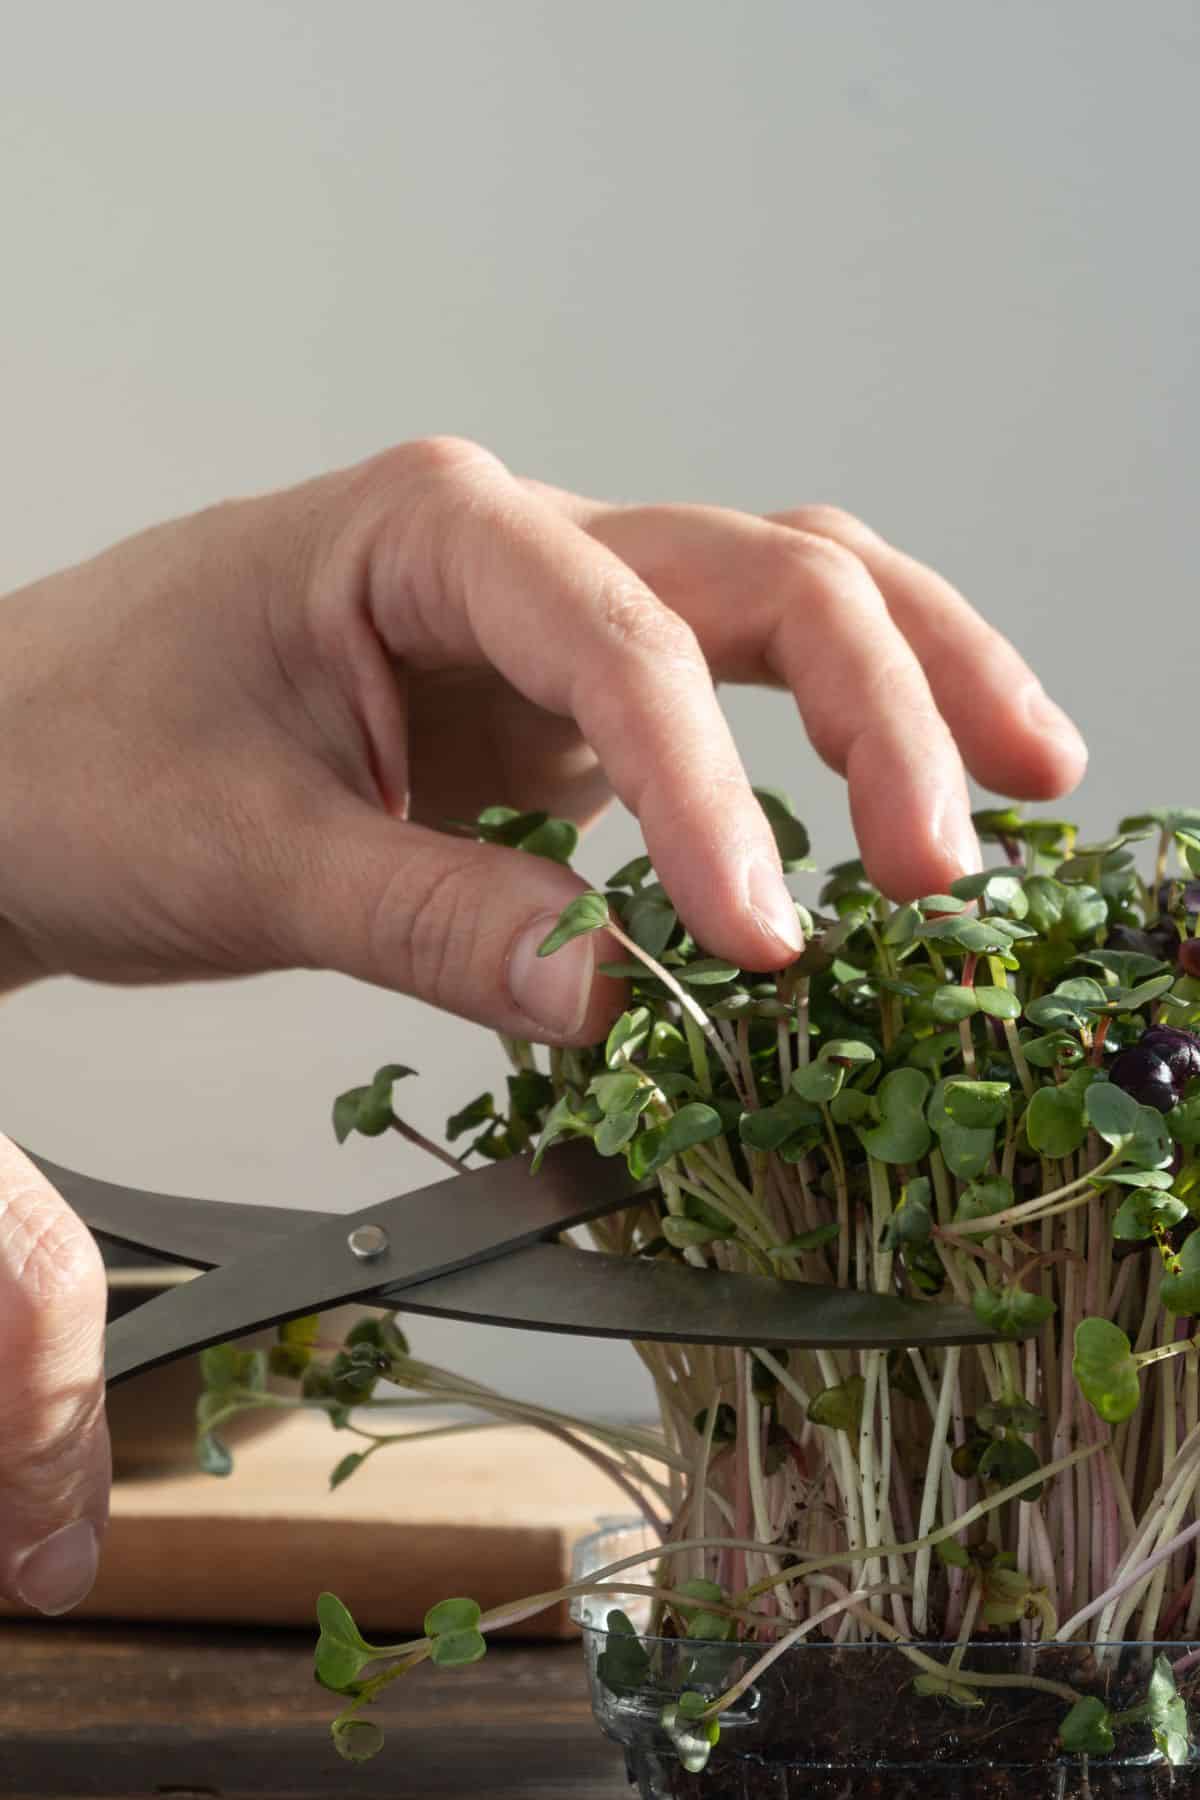 a person cutting microgreens.